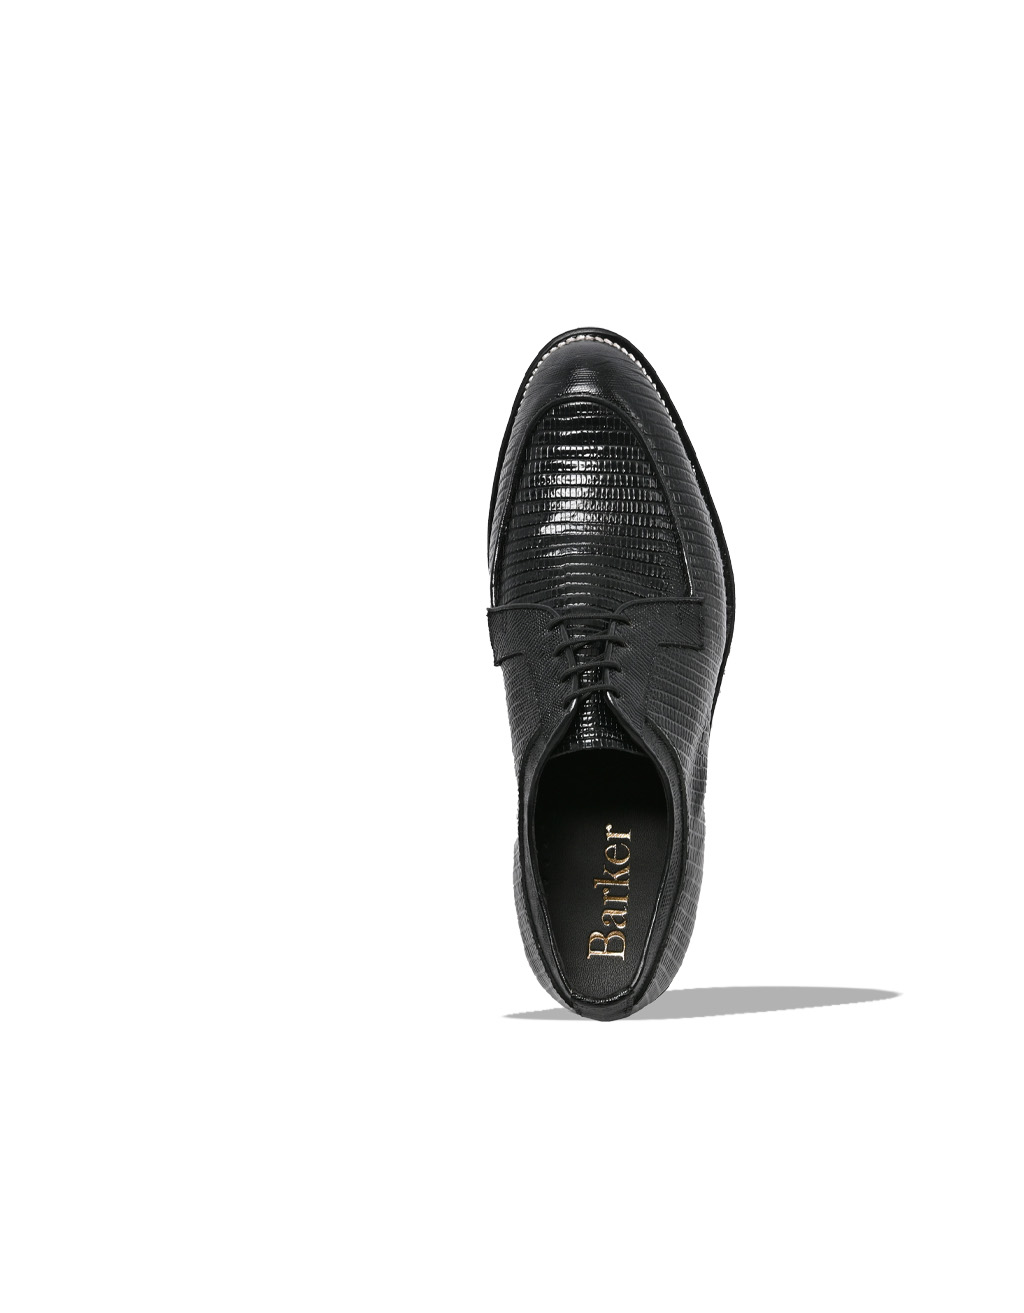 Mens Barker, Austin, Formal Black Lace Up – Bolton Shoes